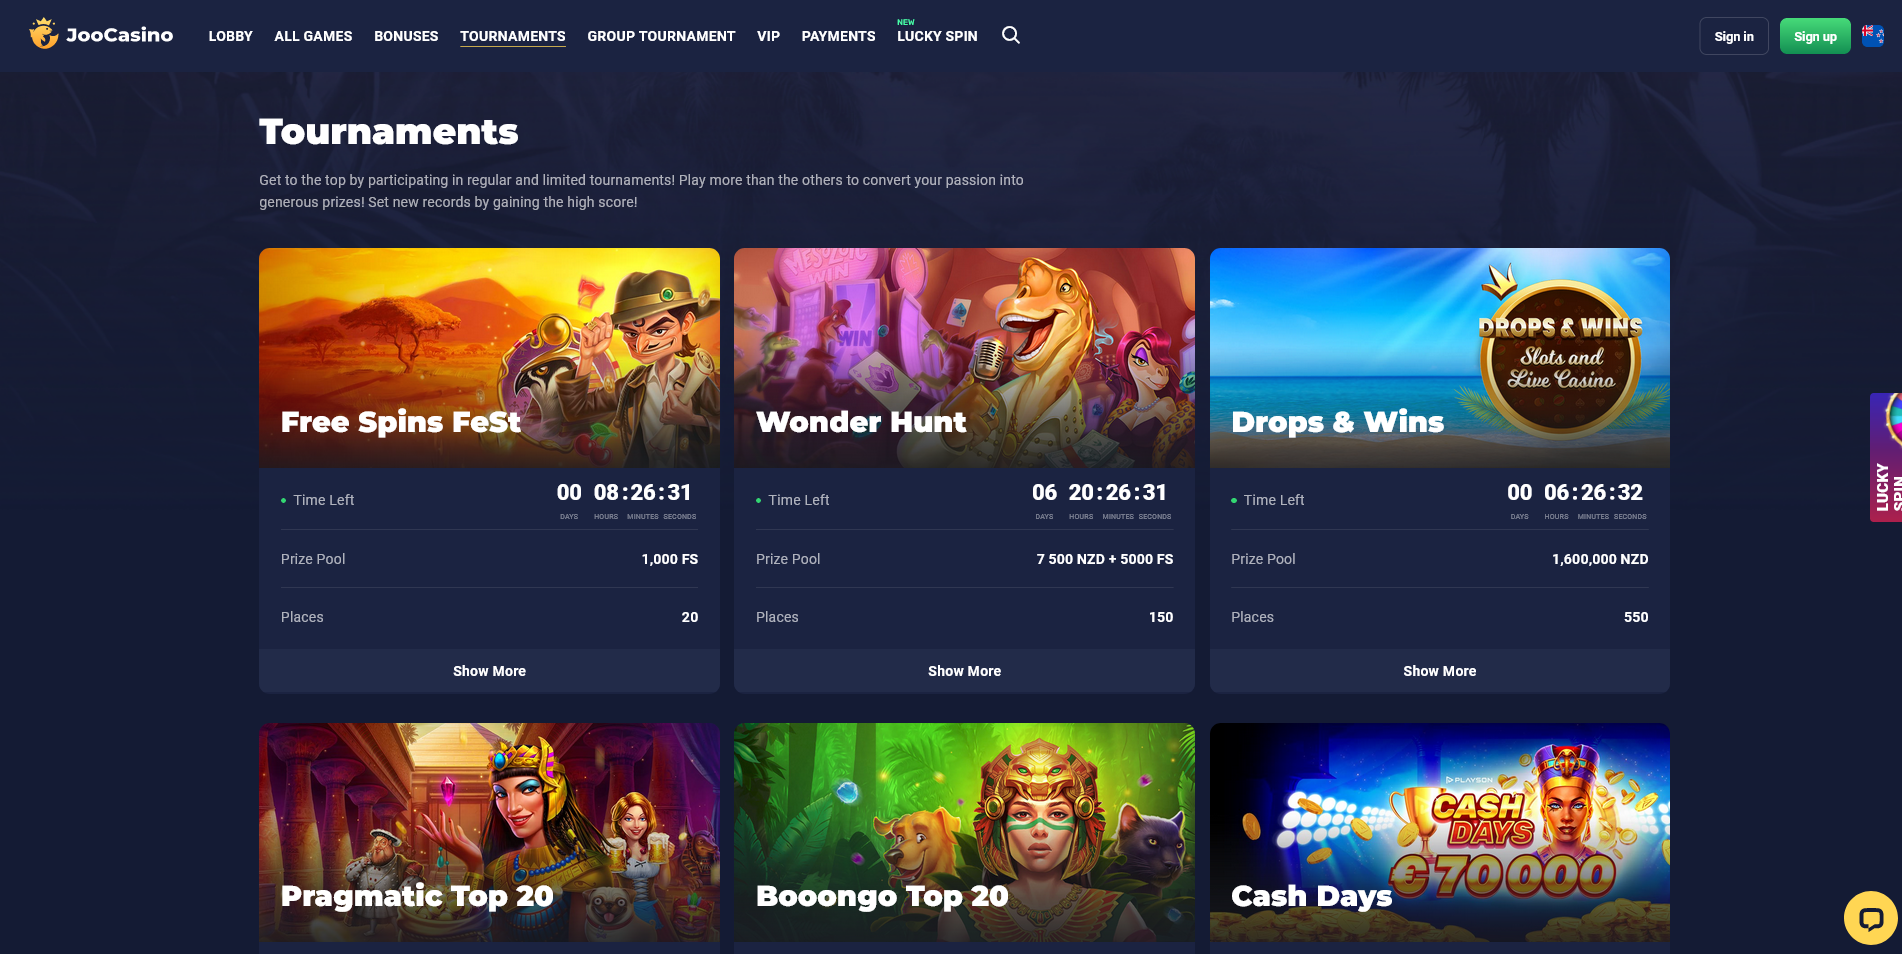 Screenshot of the Joo Casino tournaments page